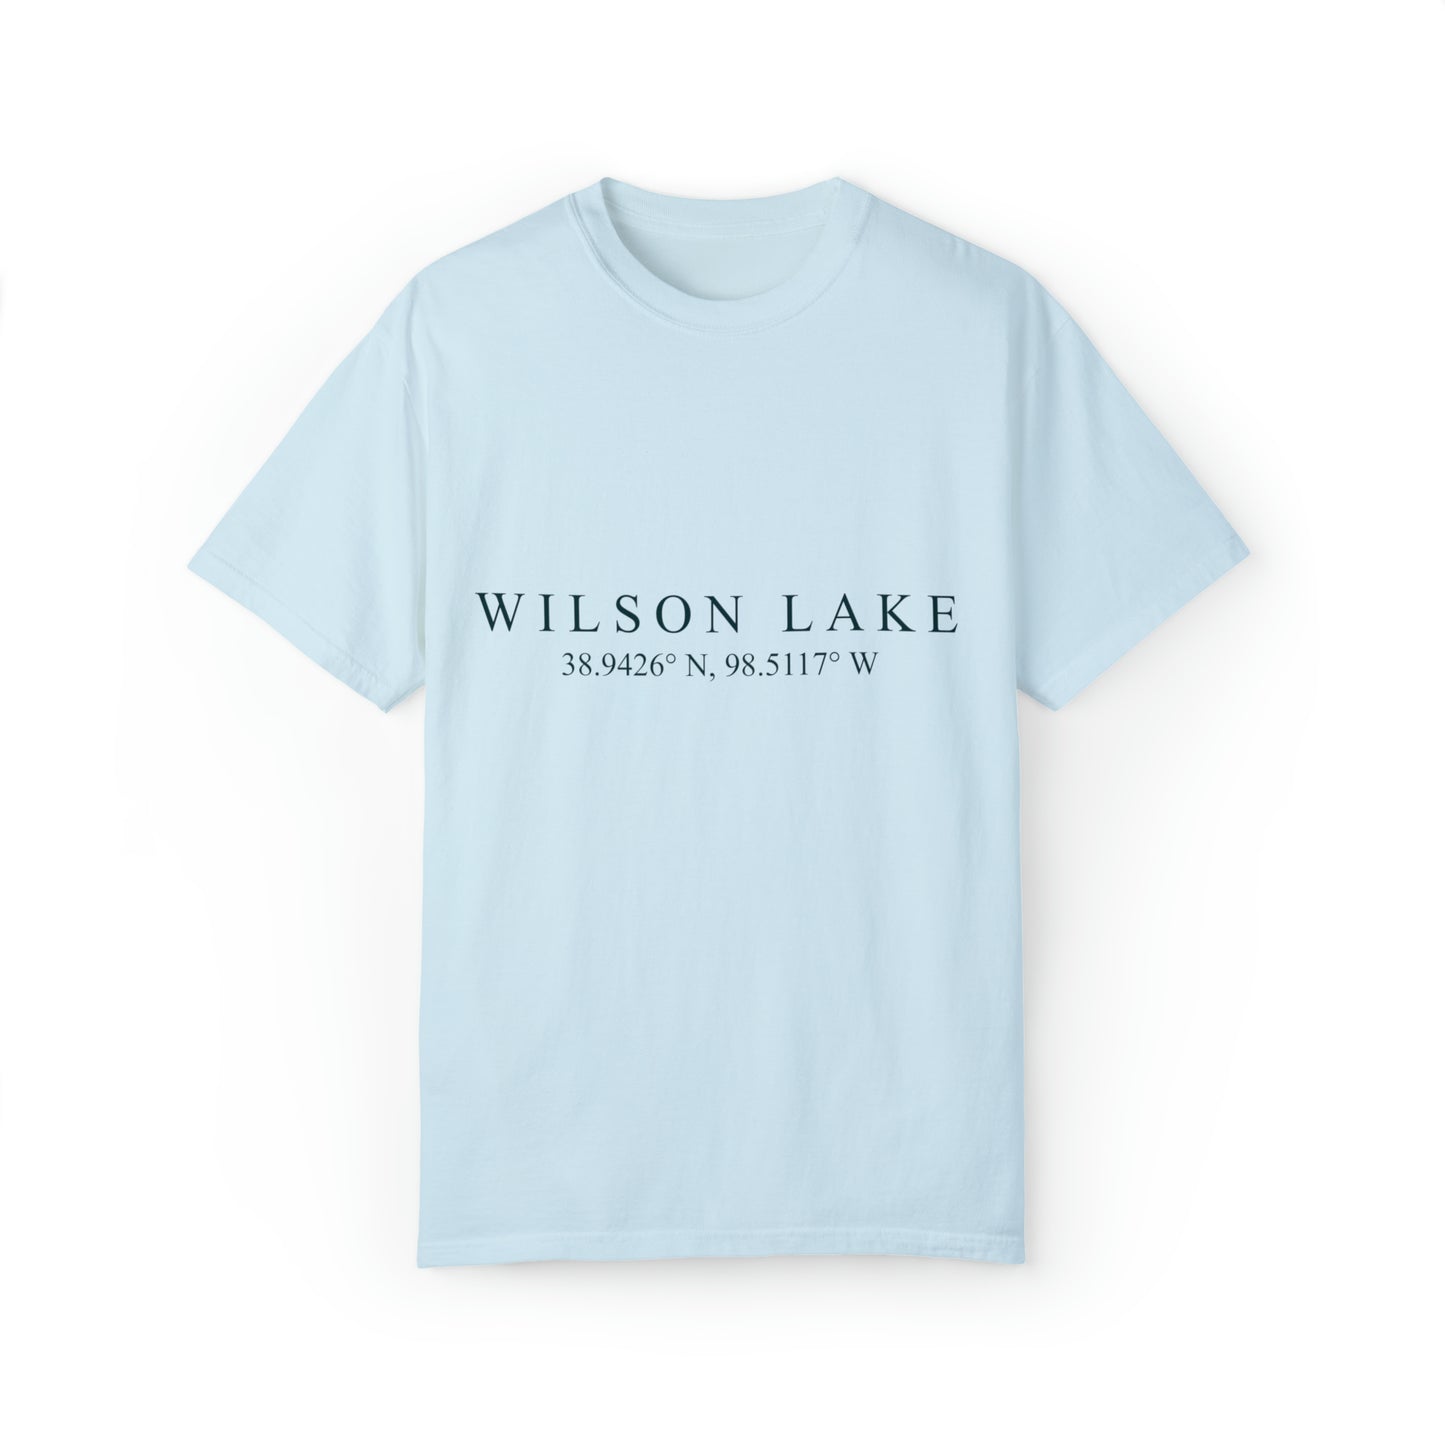 Wilson Lake, AL Tee